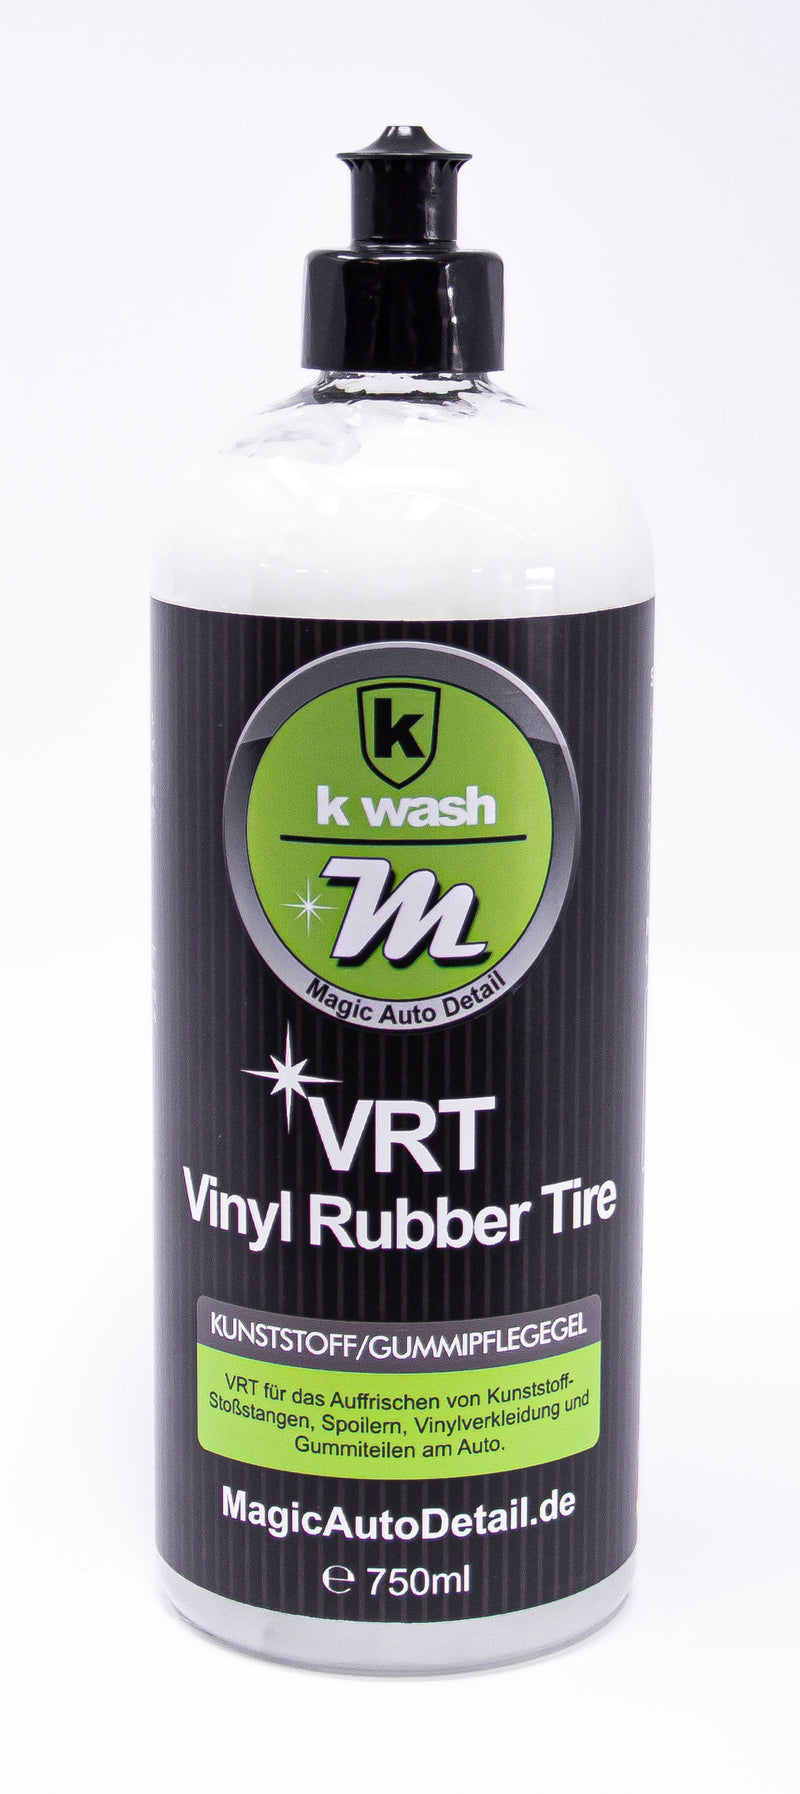 VRT VINYL RUBBER TIRE Kunststoff/Gummipflege-Gel